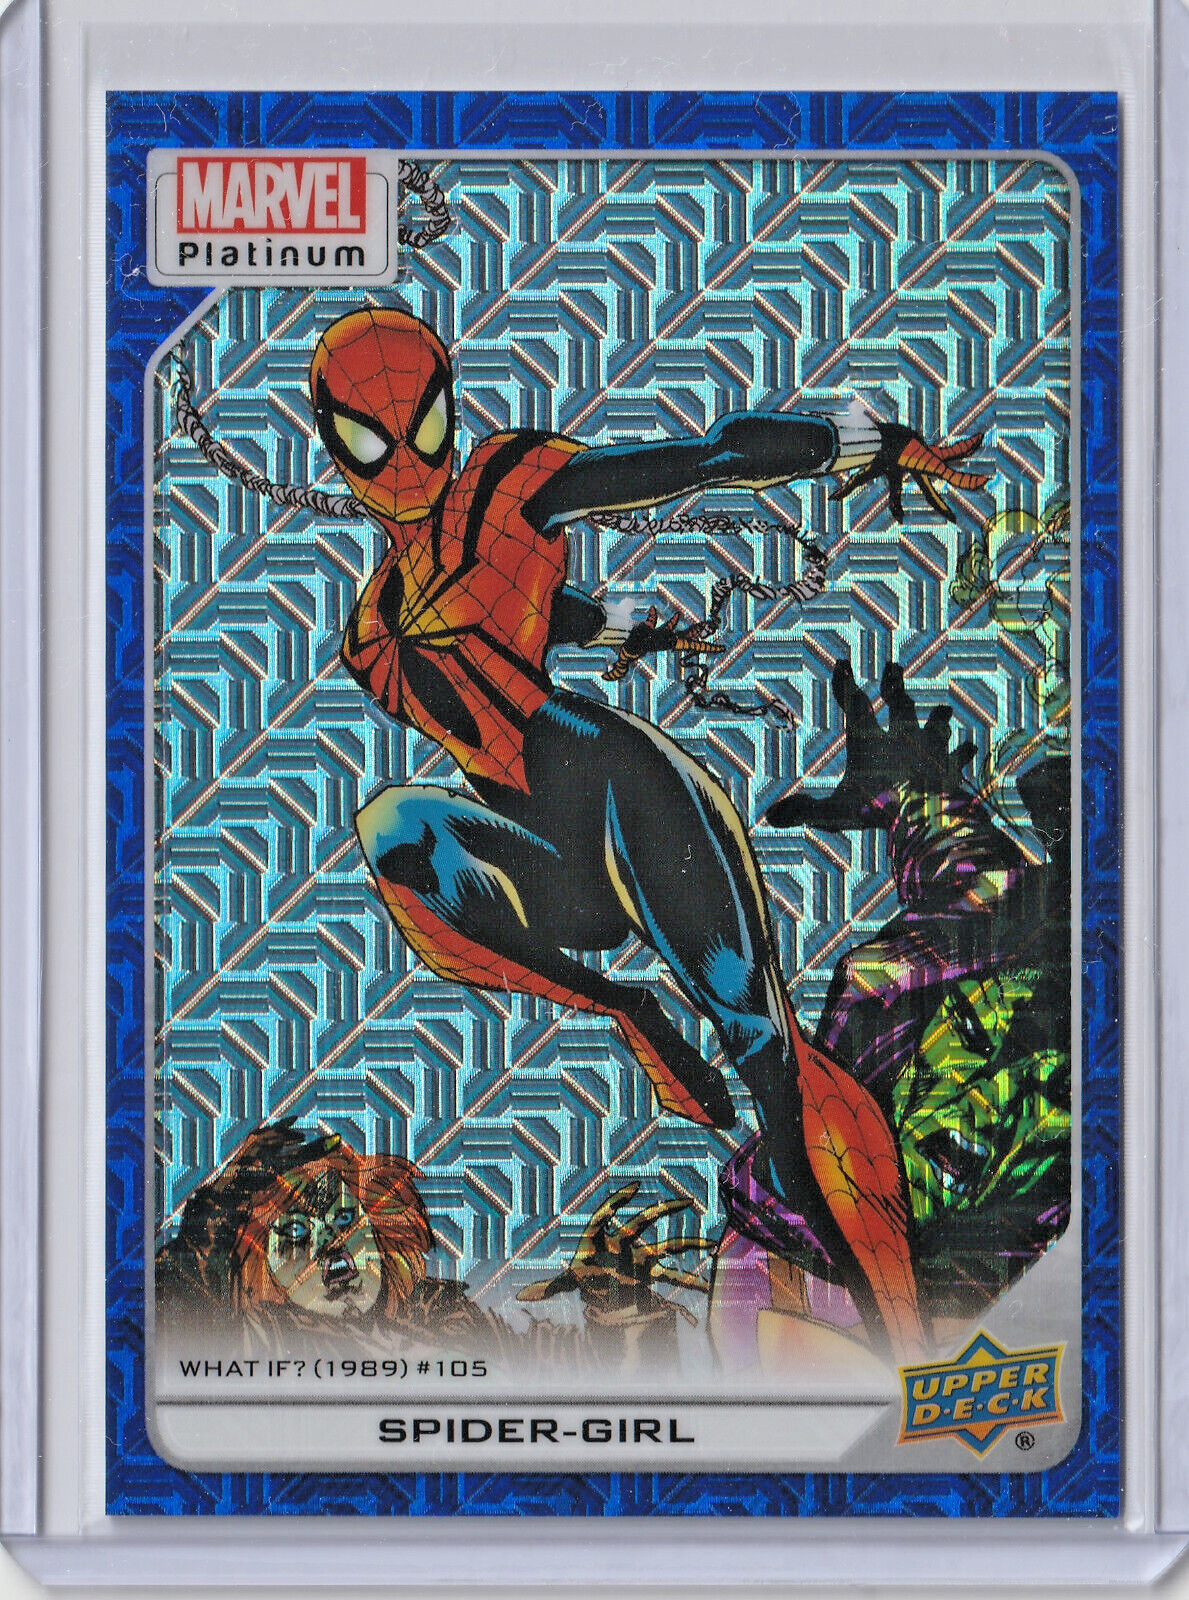 Marvel Platinum - SPIDER-GIRL #174 Blue Traxx 134/499 SP - Upper Deck